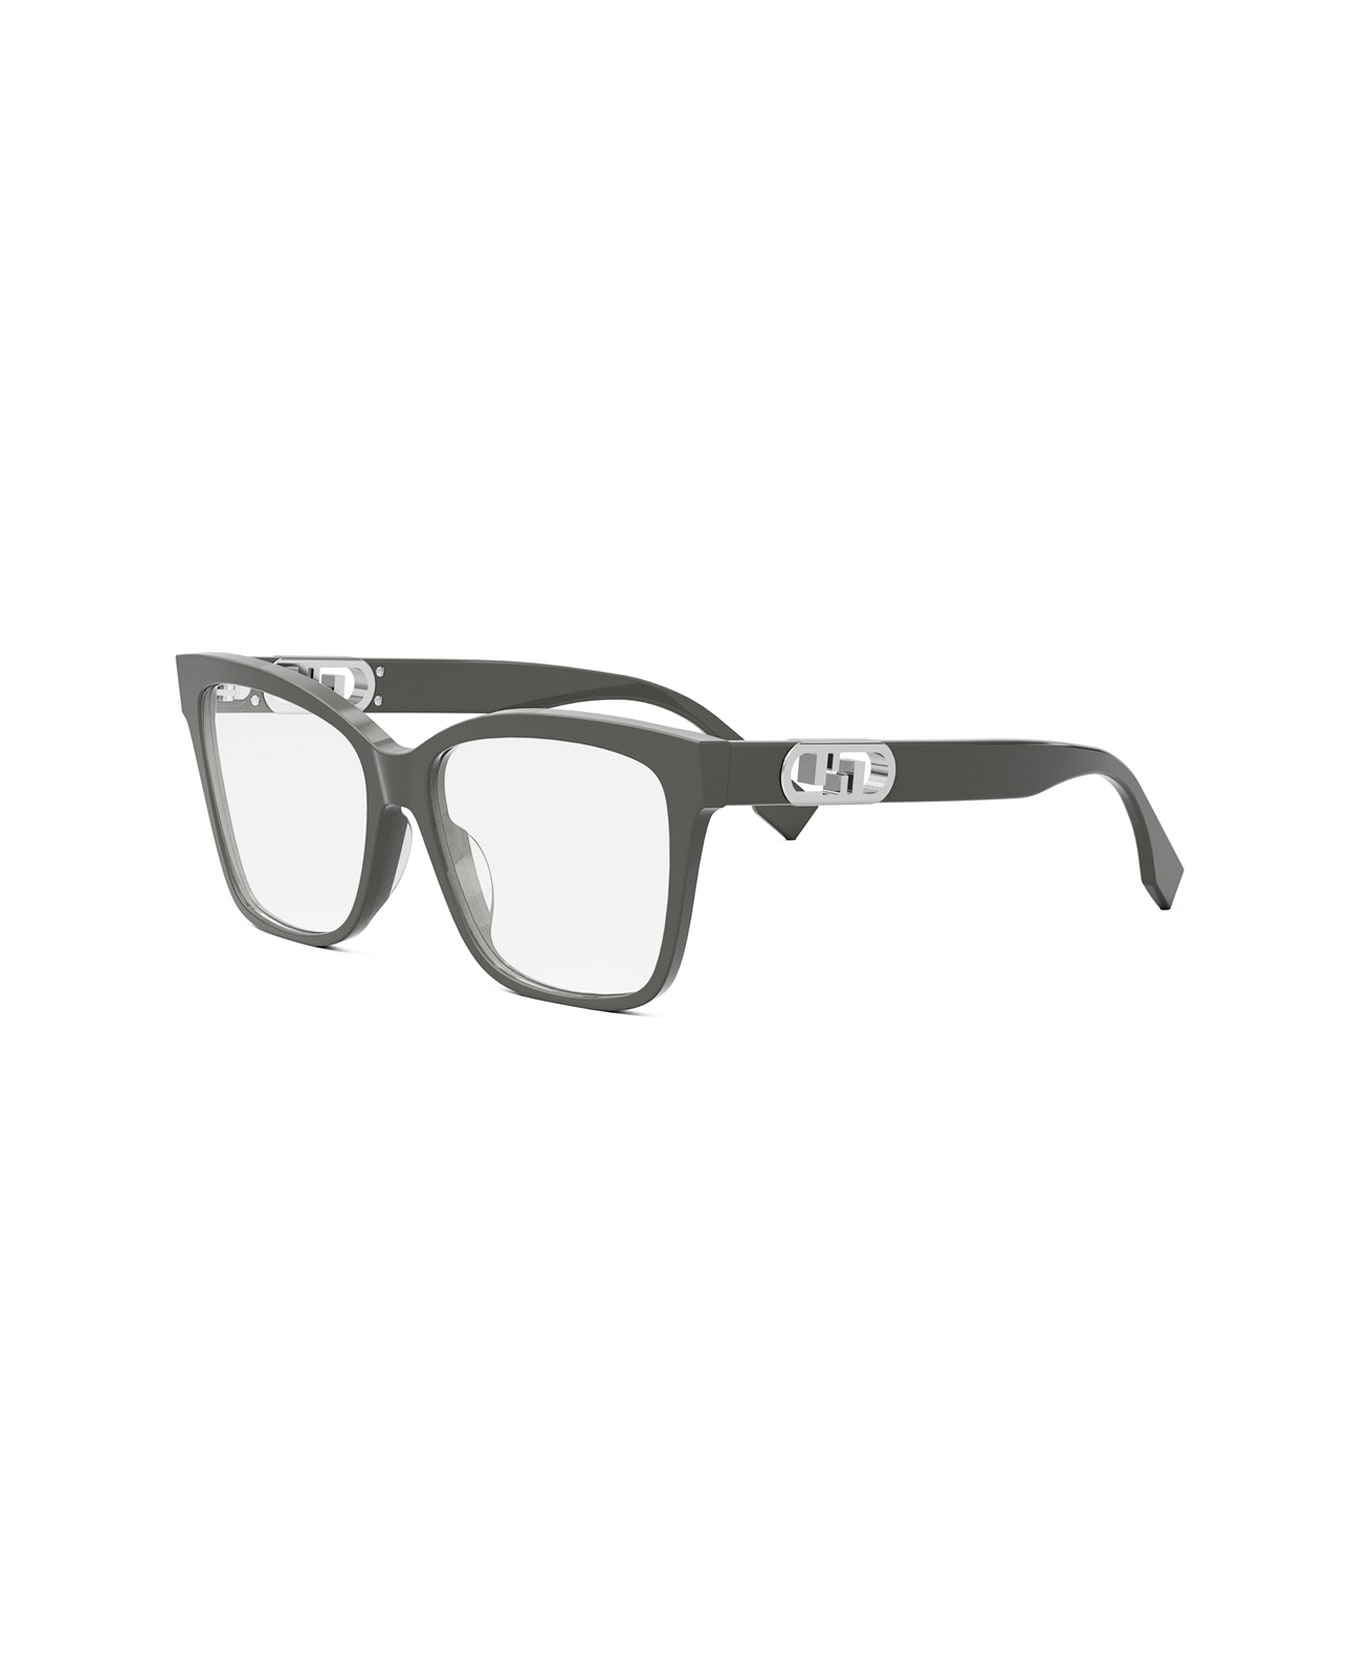 Fendi Eyewear Fe50025i 020 Glasses - Grigio アイウェア